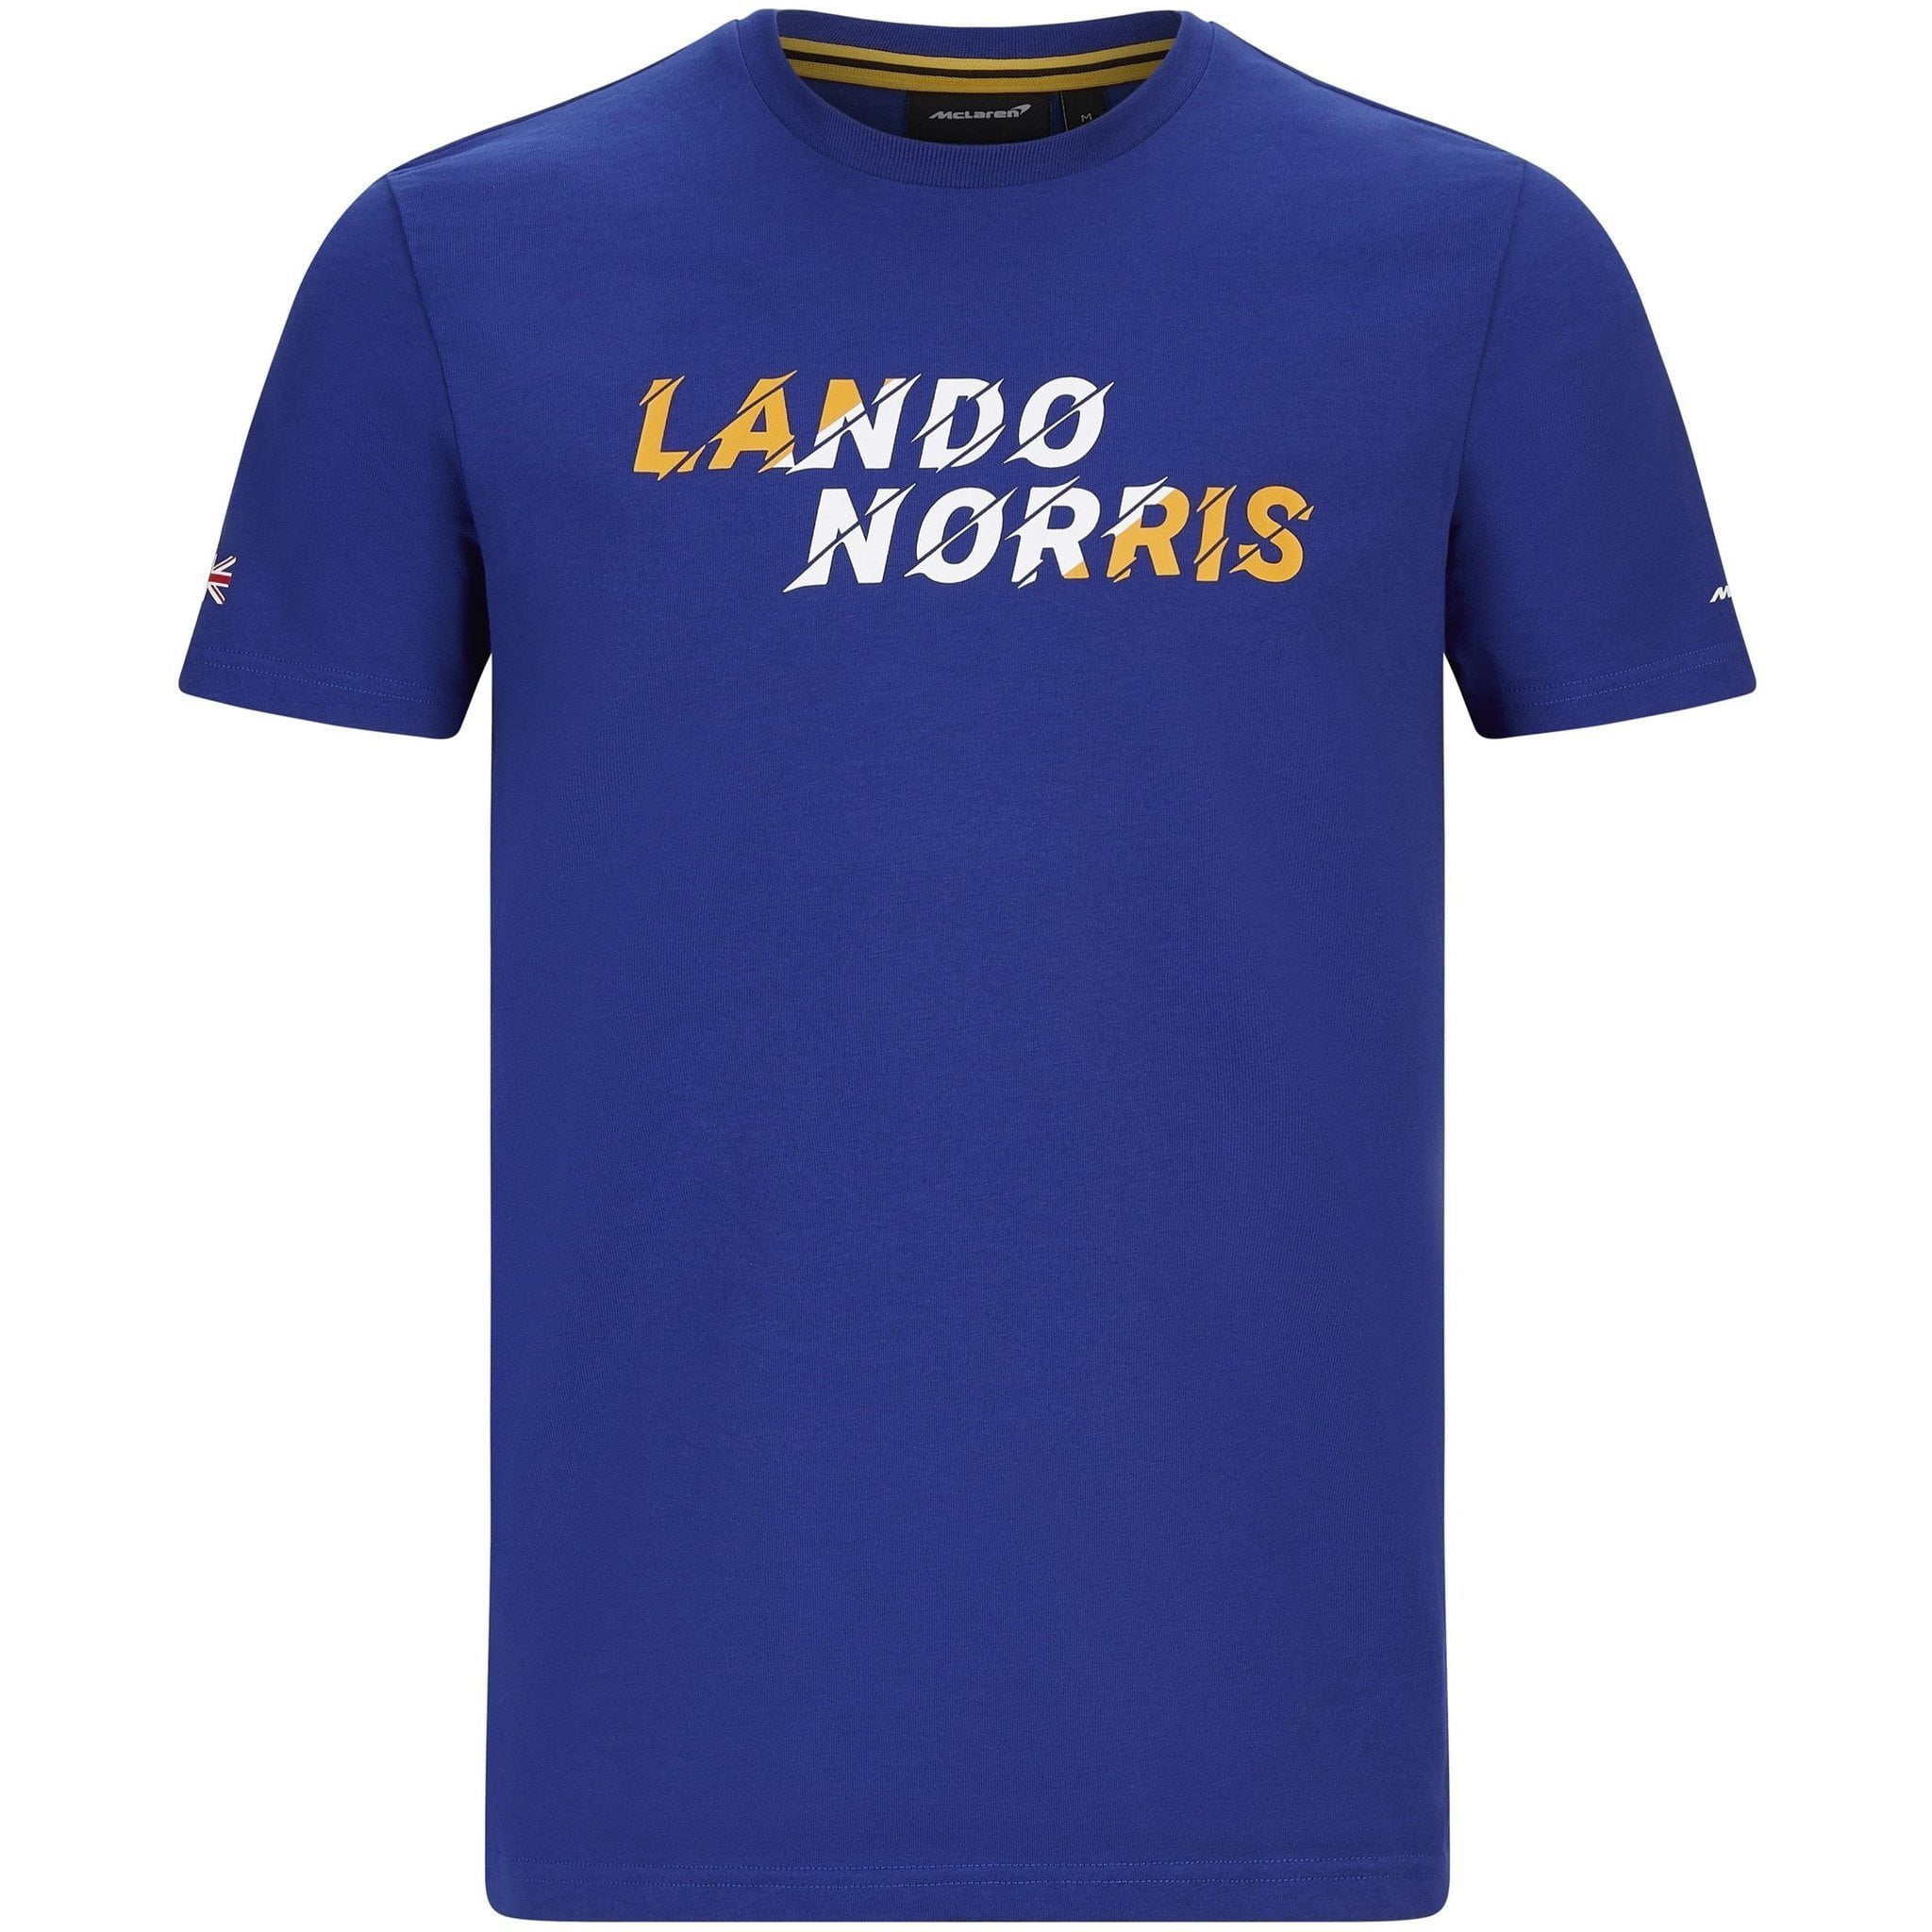 McLaren 2020 F1 Short Sleeve Lando Norris T Shirt in Blue 